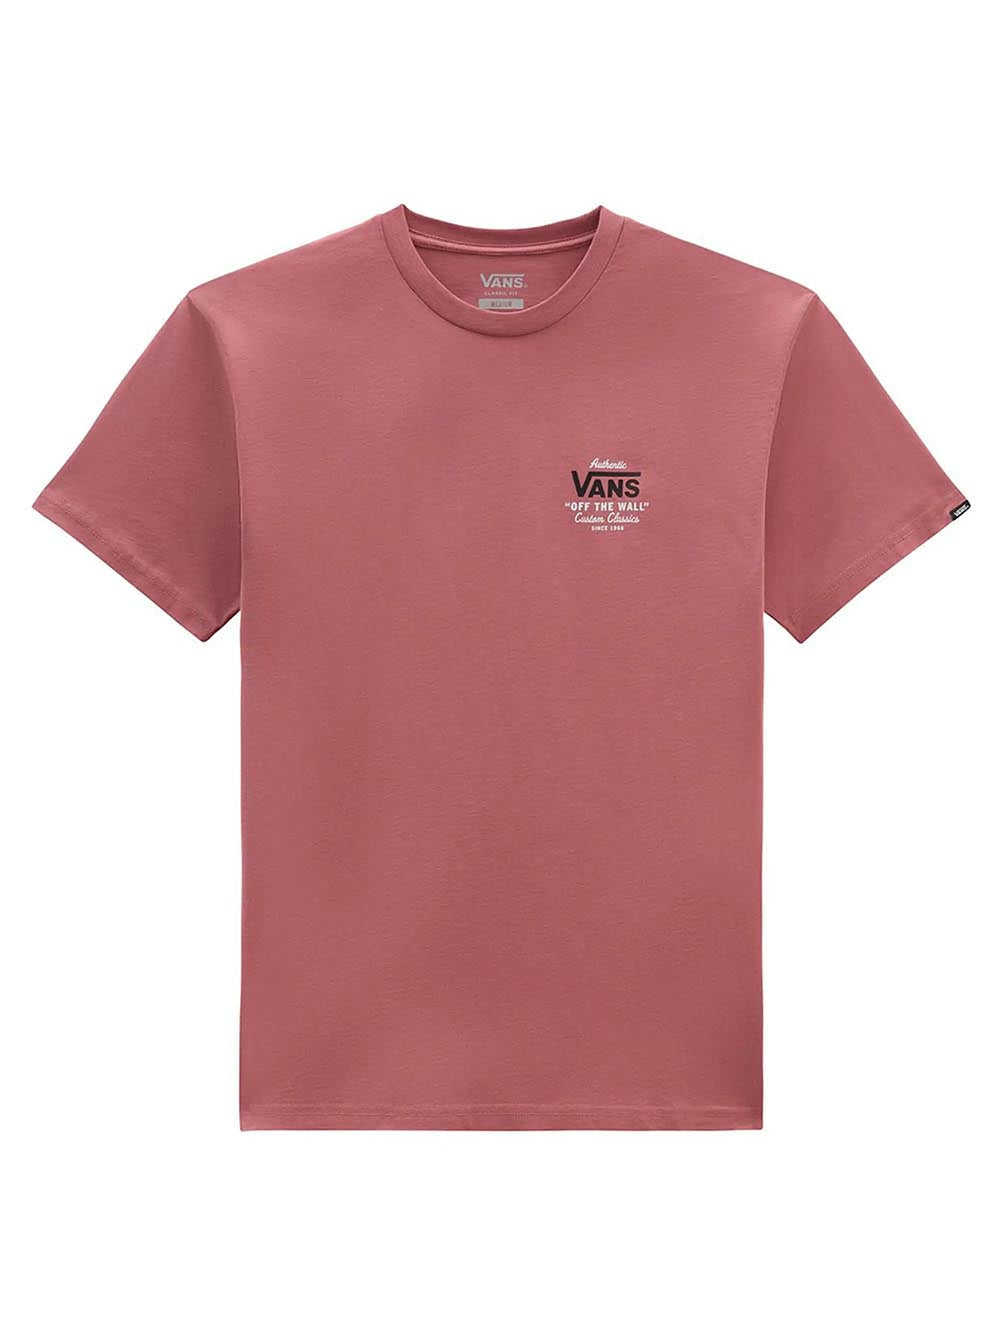 Vans T-shirt Uomo Rosa pesca